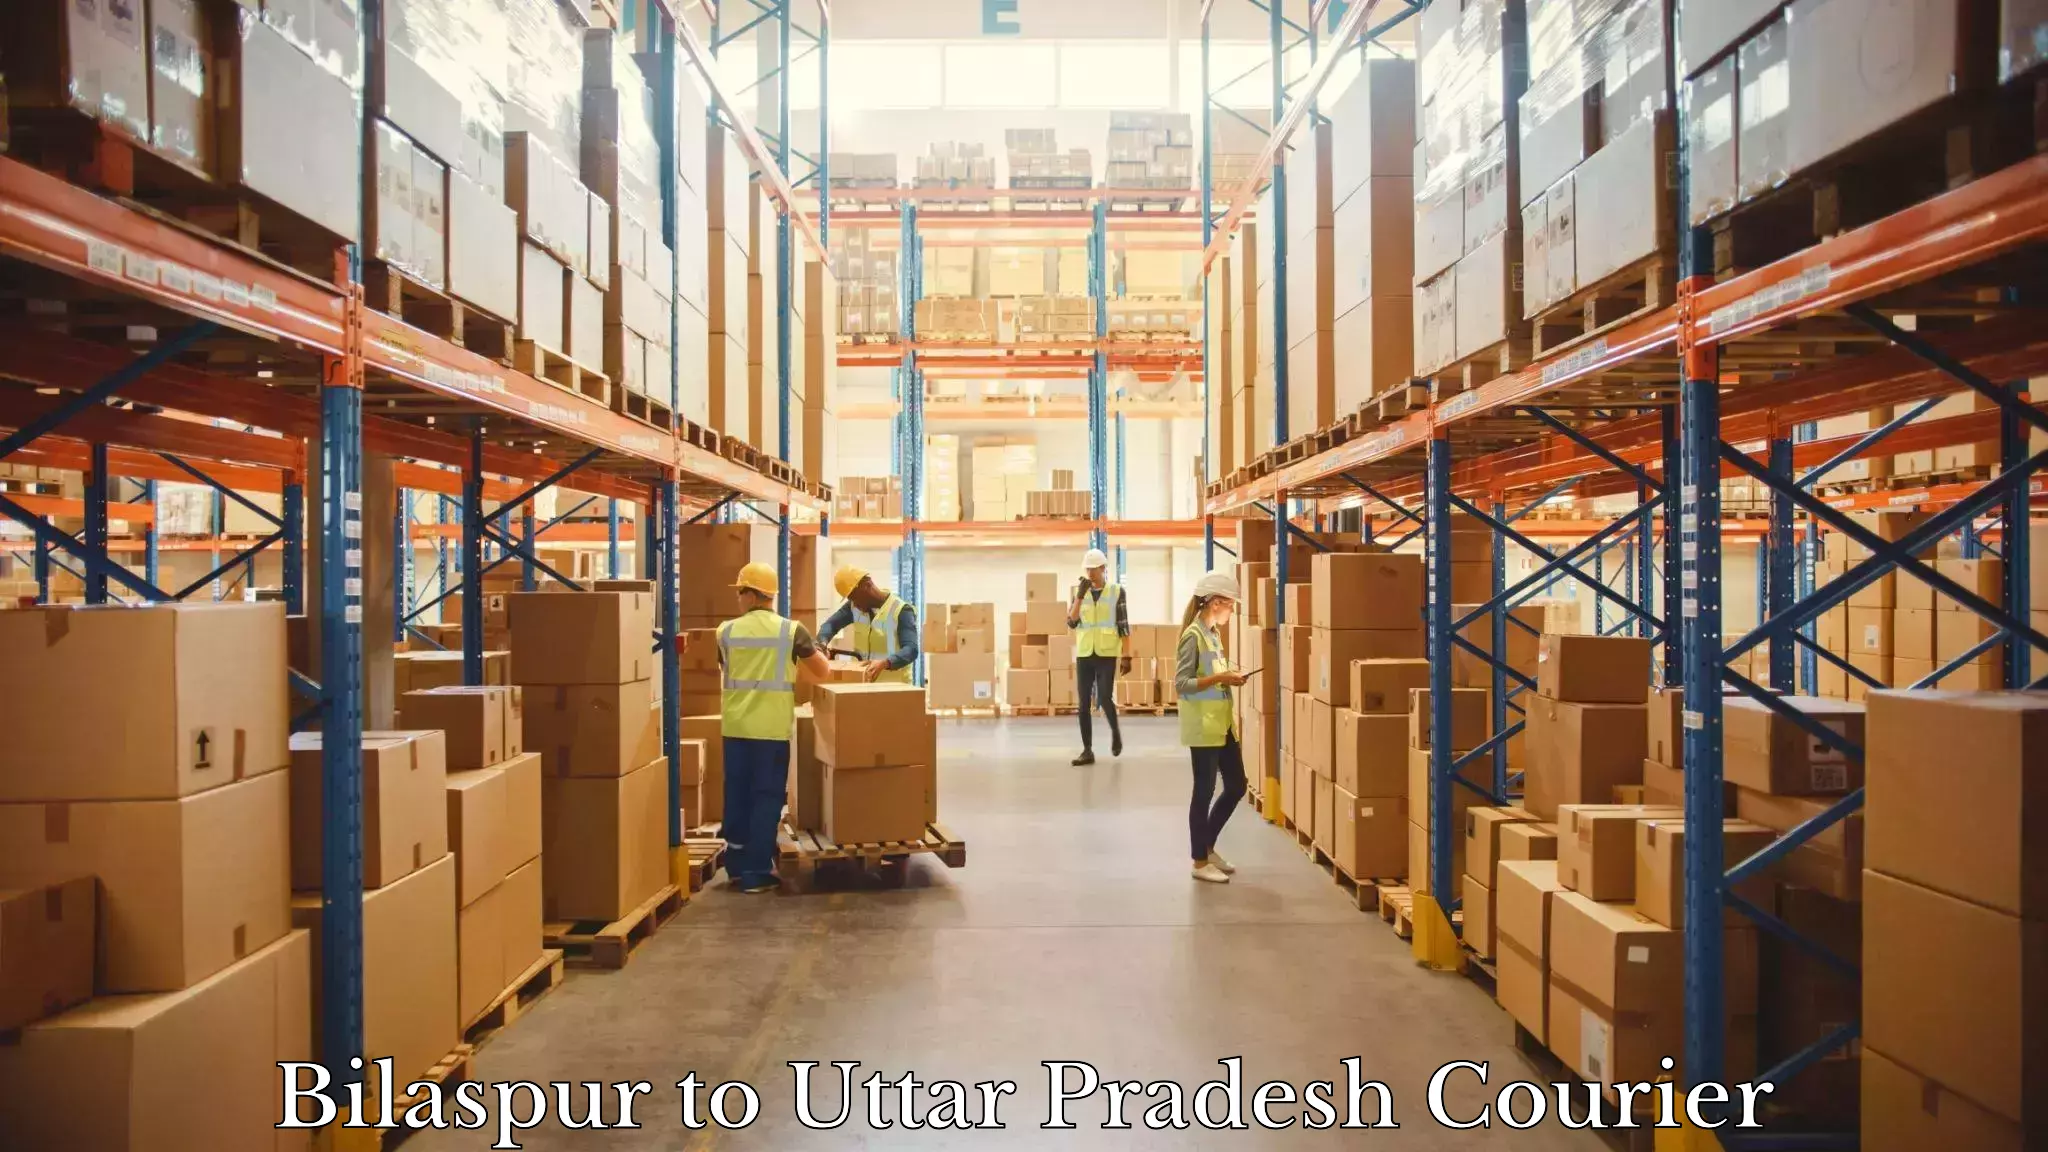 Digital courier platforms Bilaspur to Uttar Pradesh